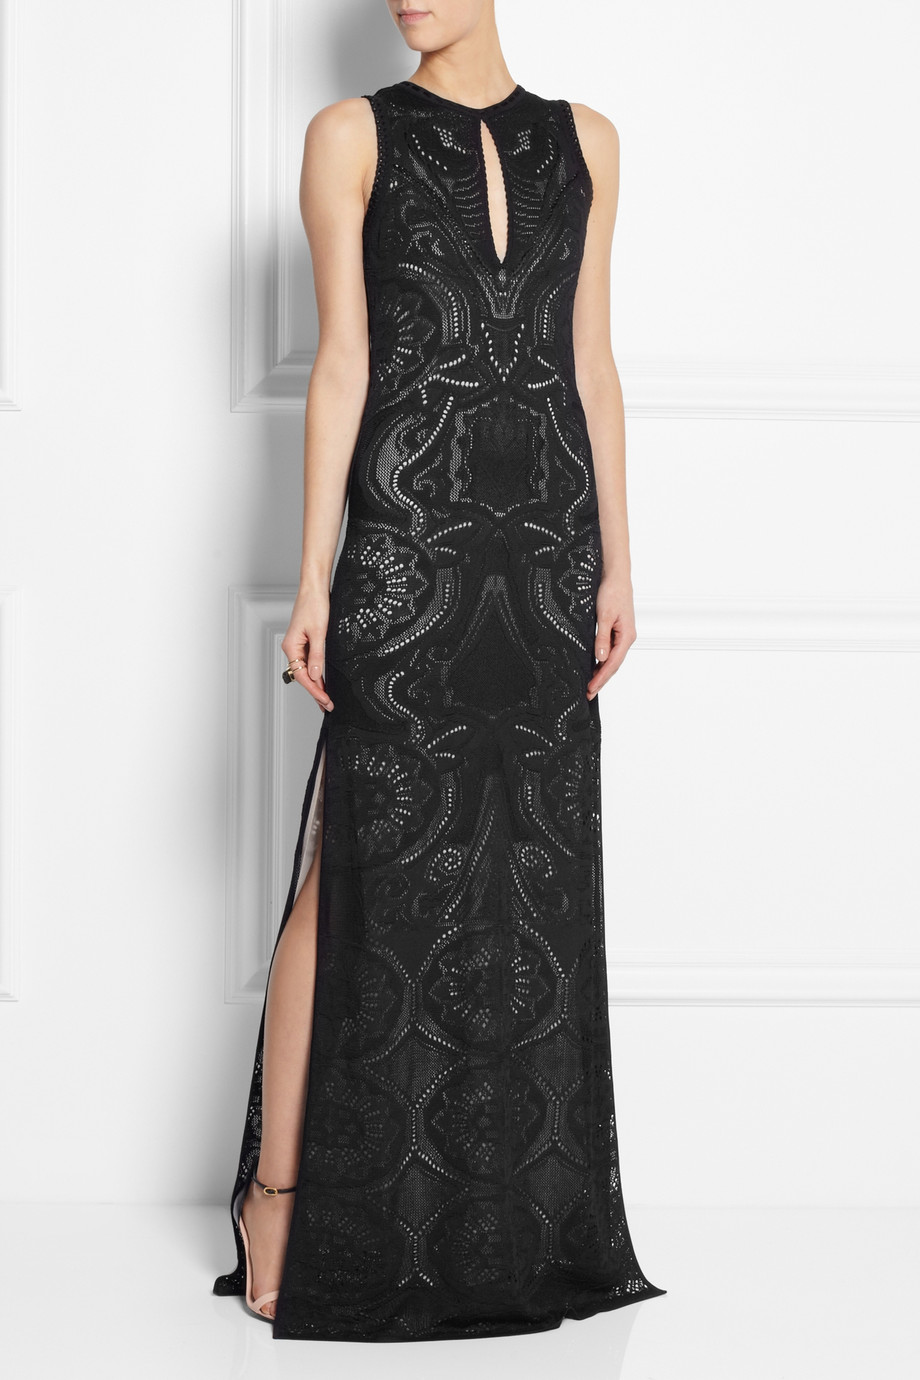 Lyst - Roberto cavalli Crocheted Lace Maxi Dress in Black